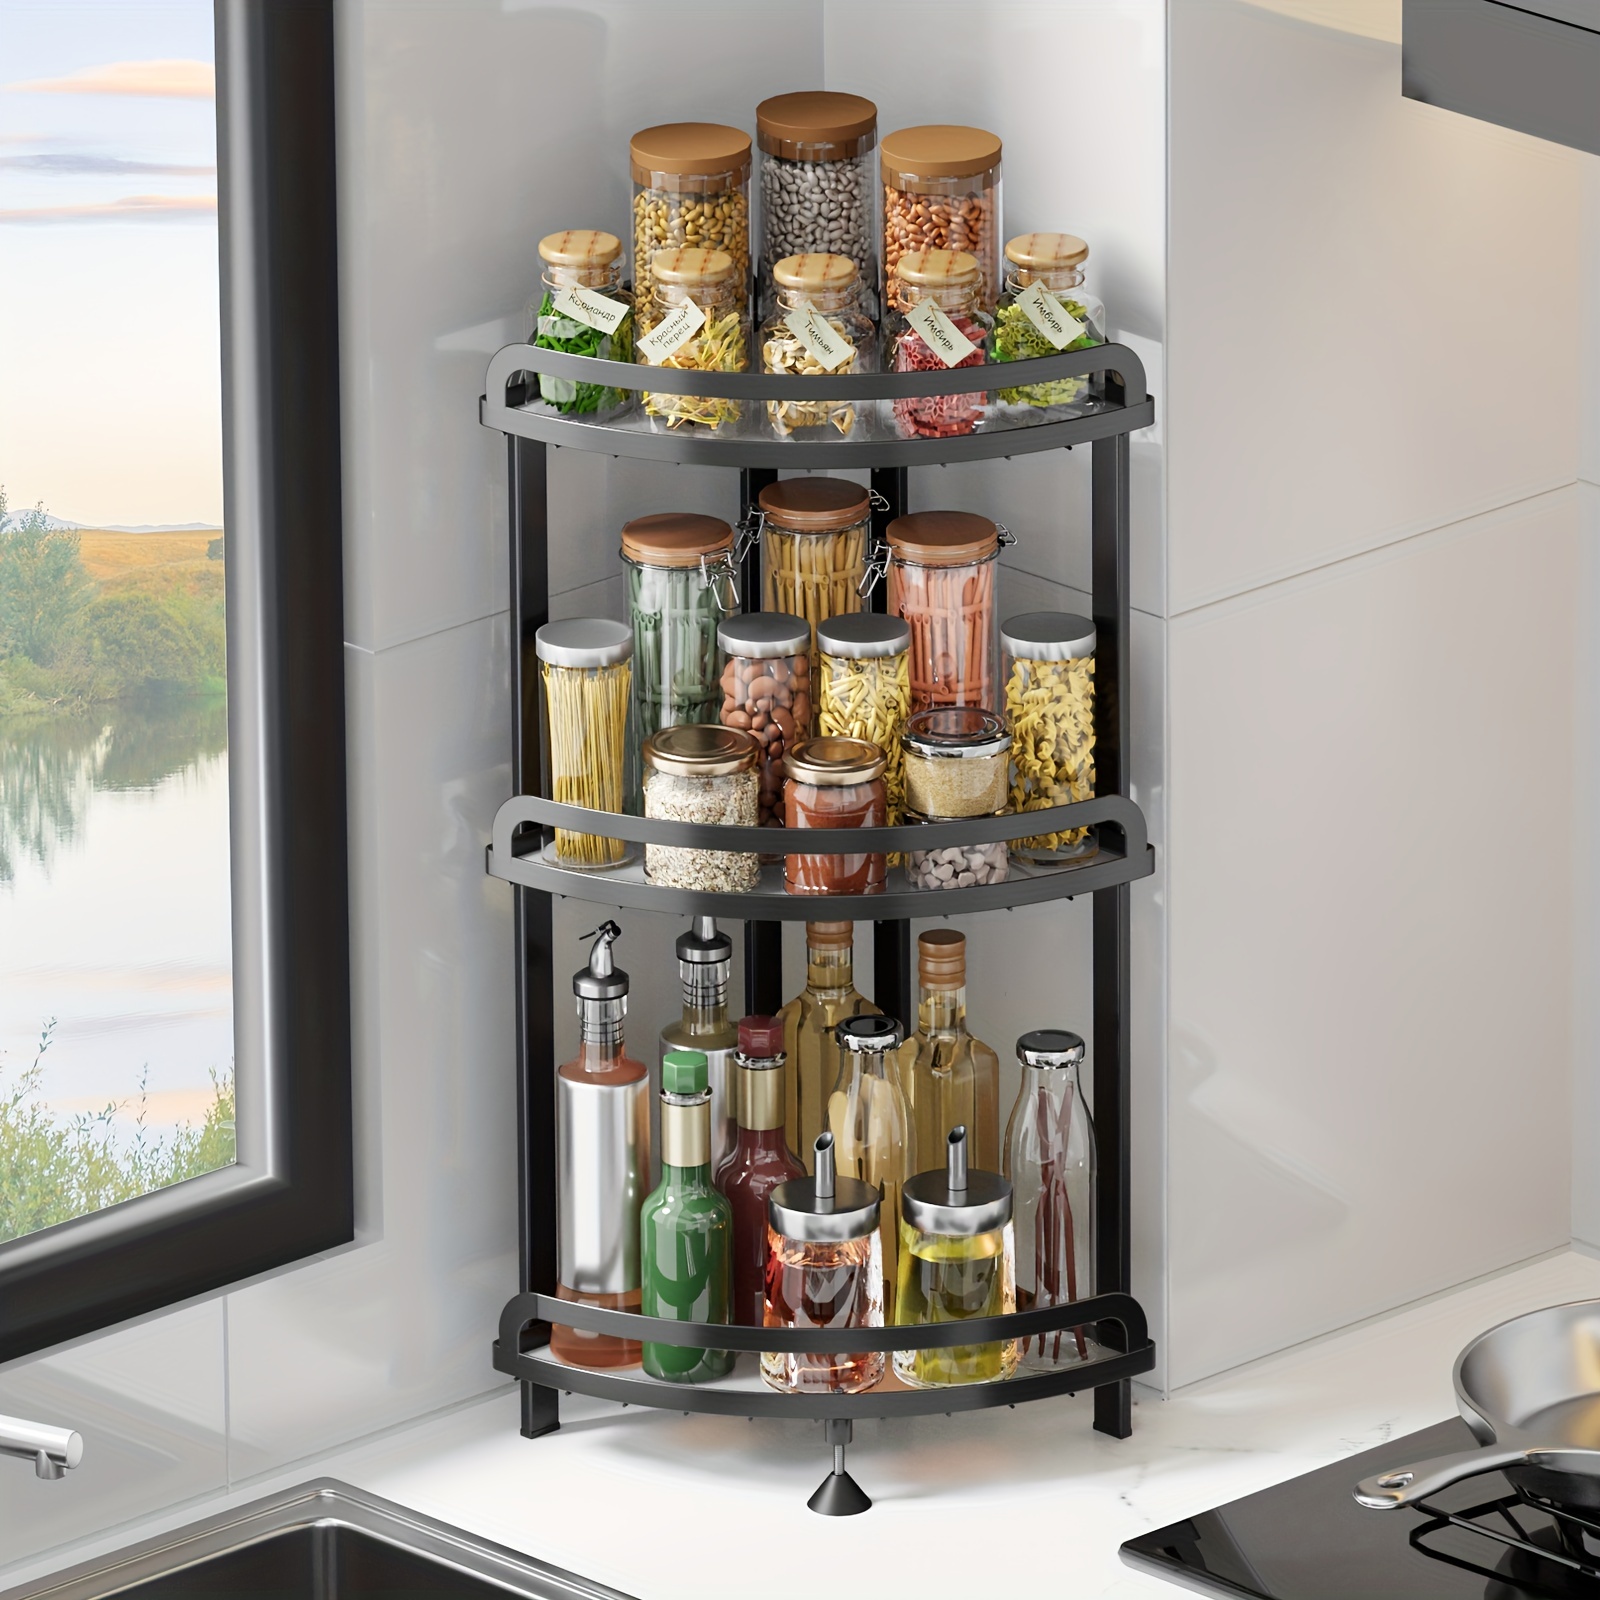 2/3-tier Spice Rack Organizer For Countertop, Kitchen Countertop